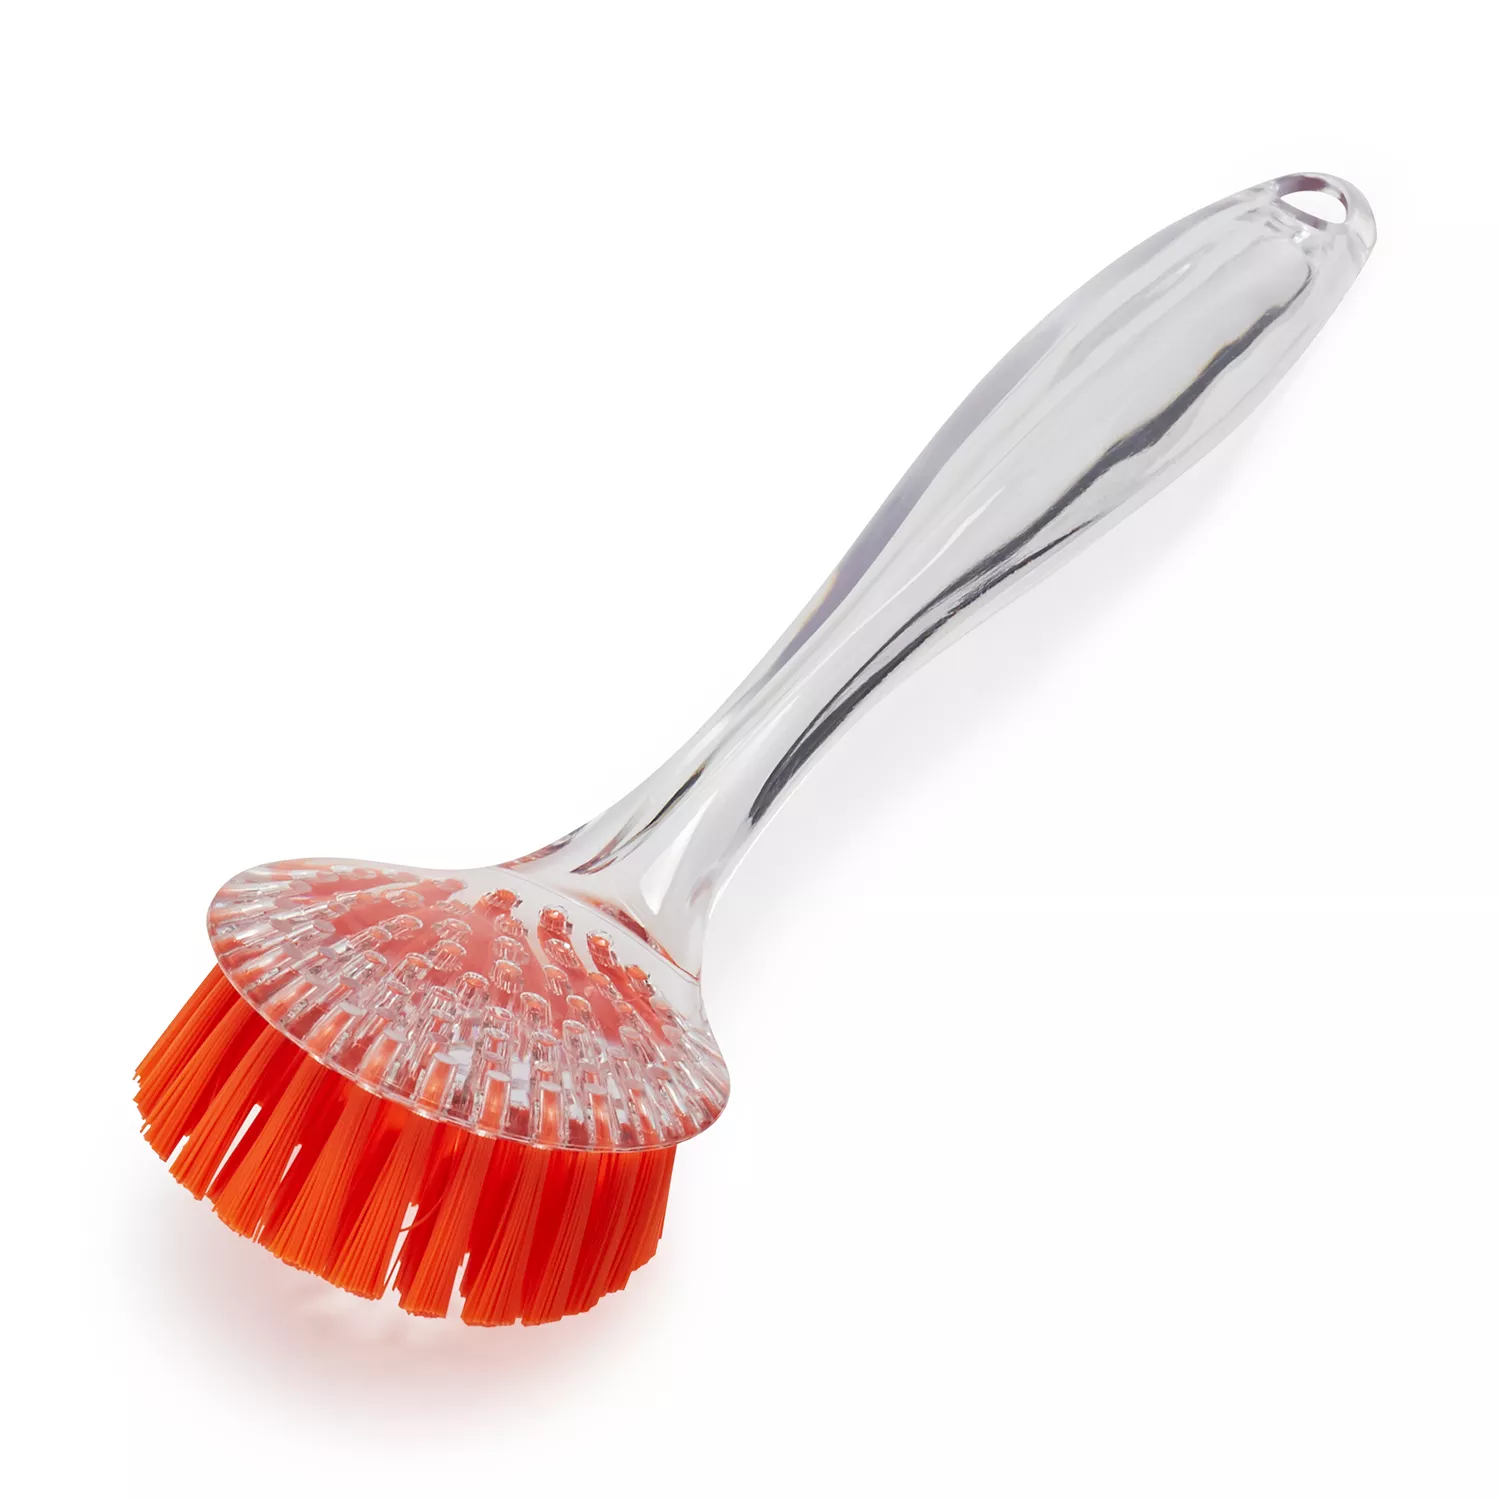 Casabella Clear Handle Dish Brush Scrubber